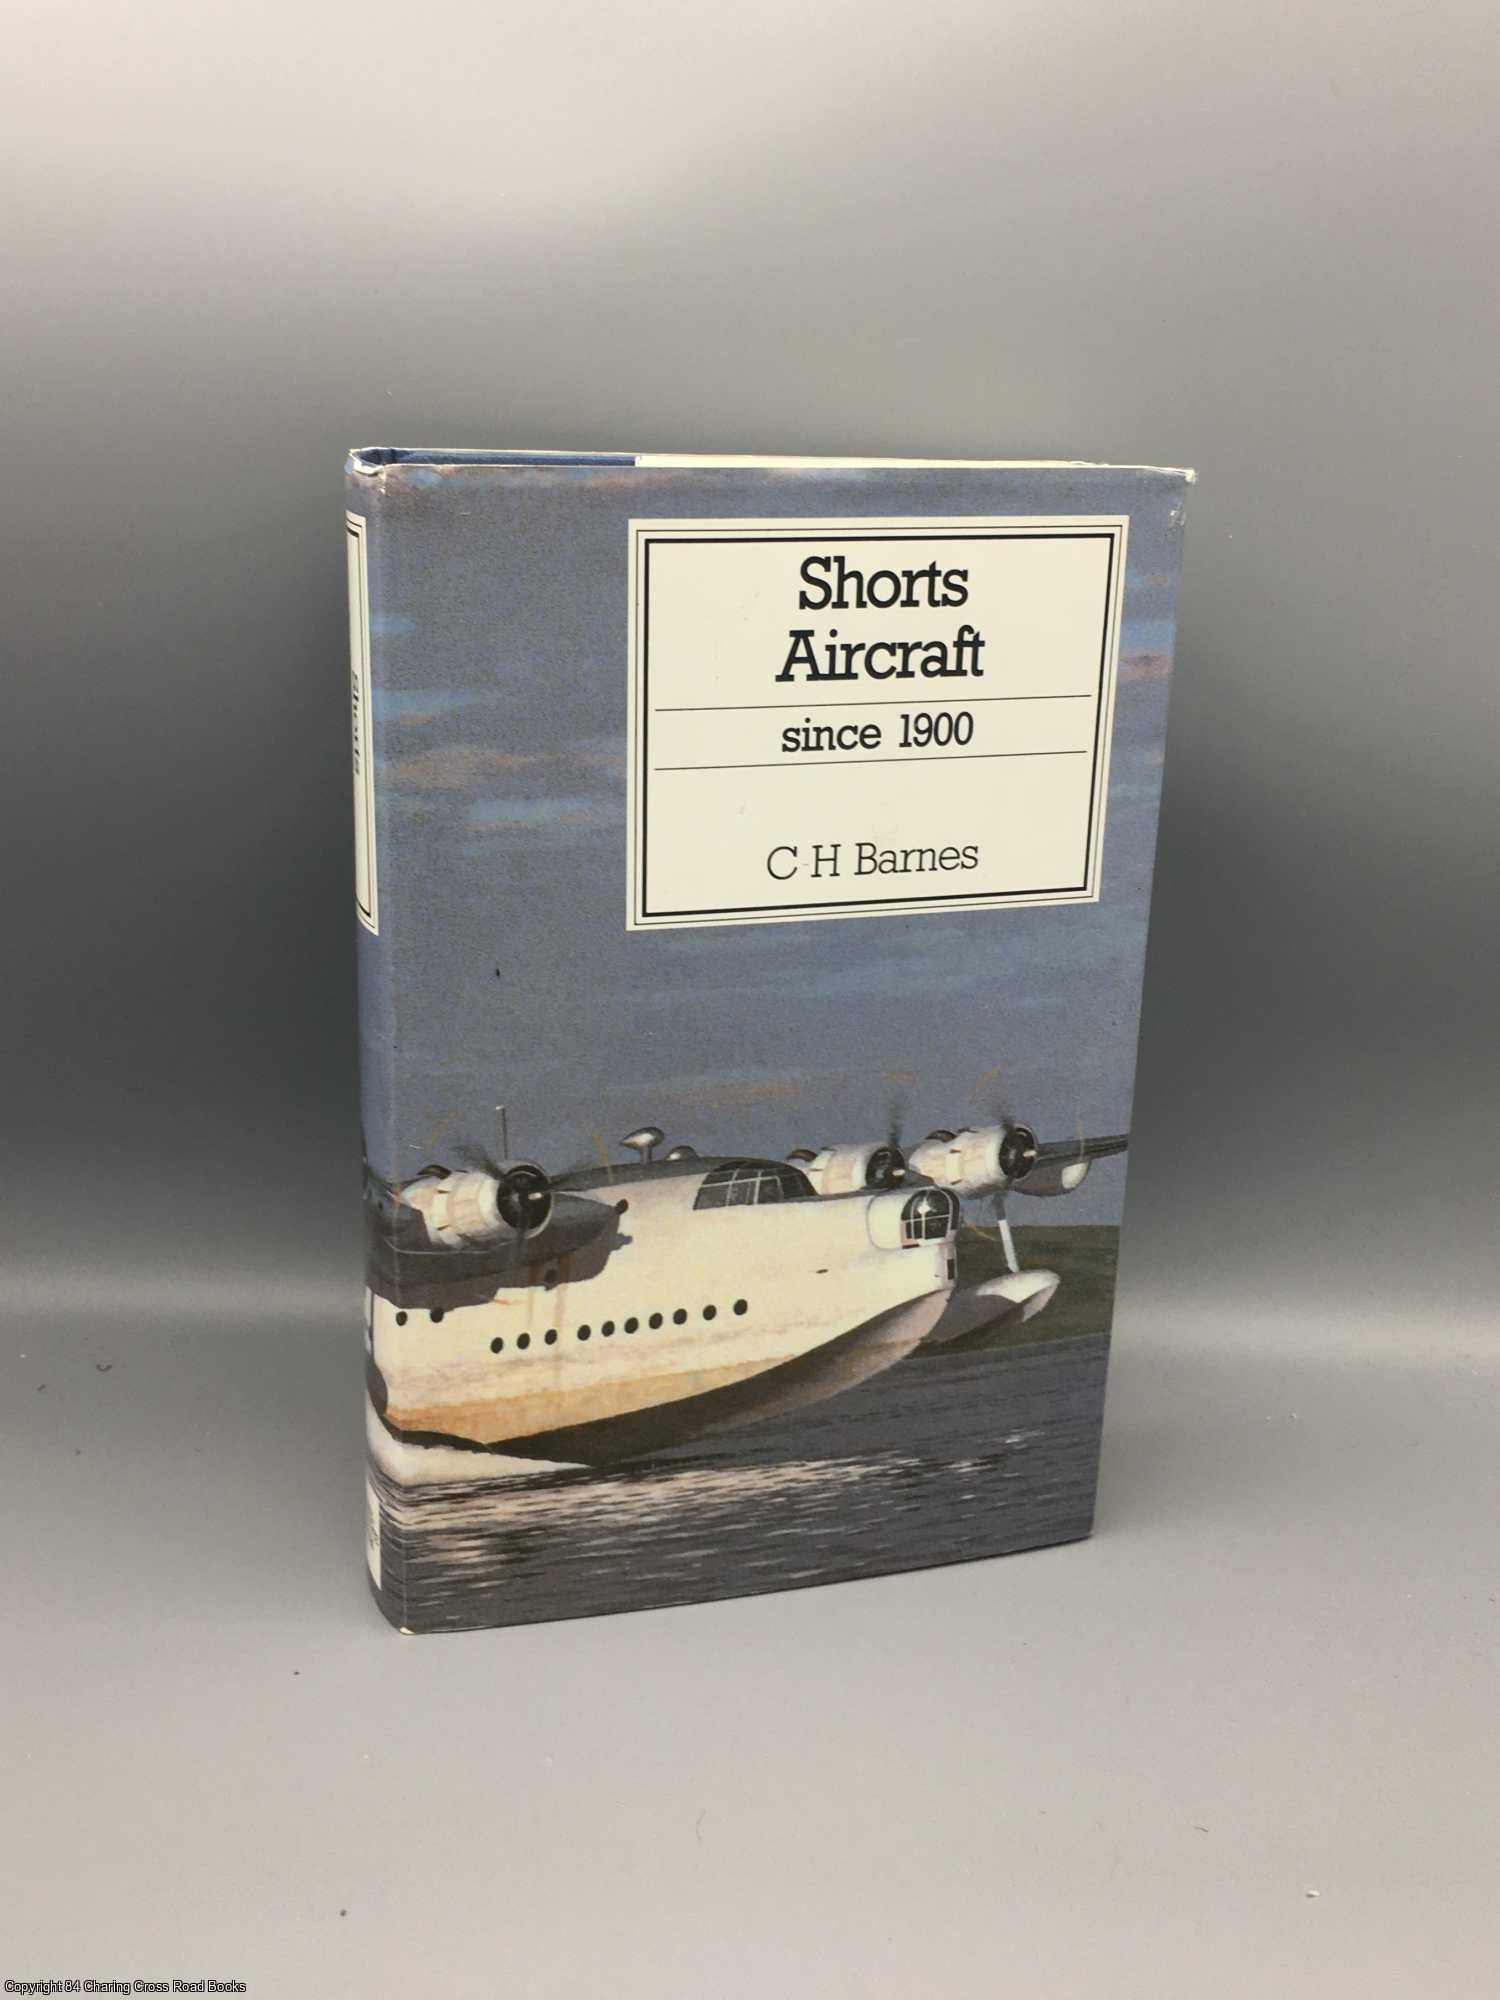 Barnes, C H - Shorts Aircraft Since 1900